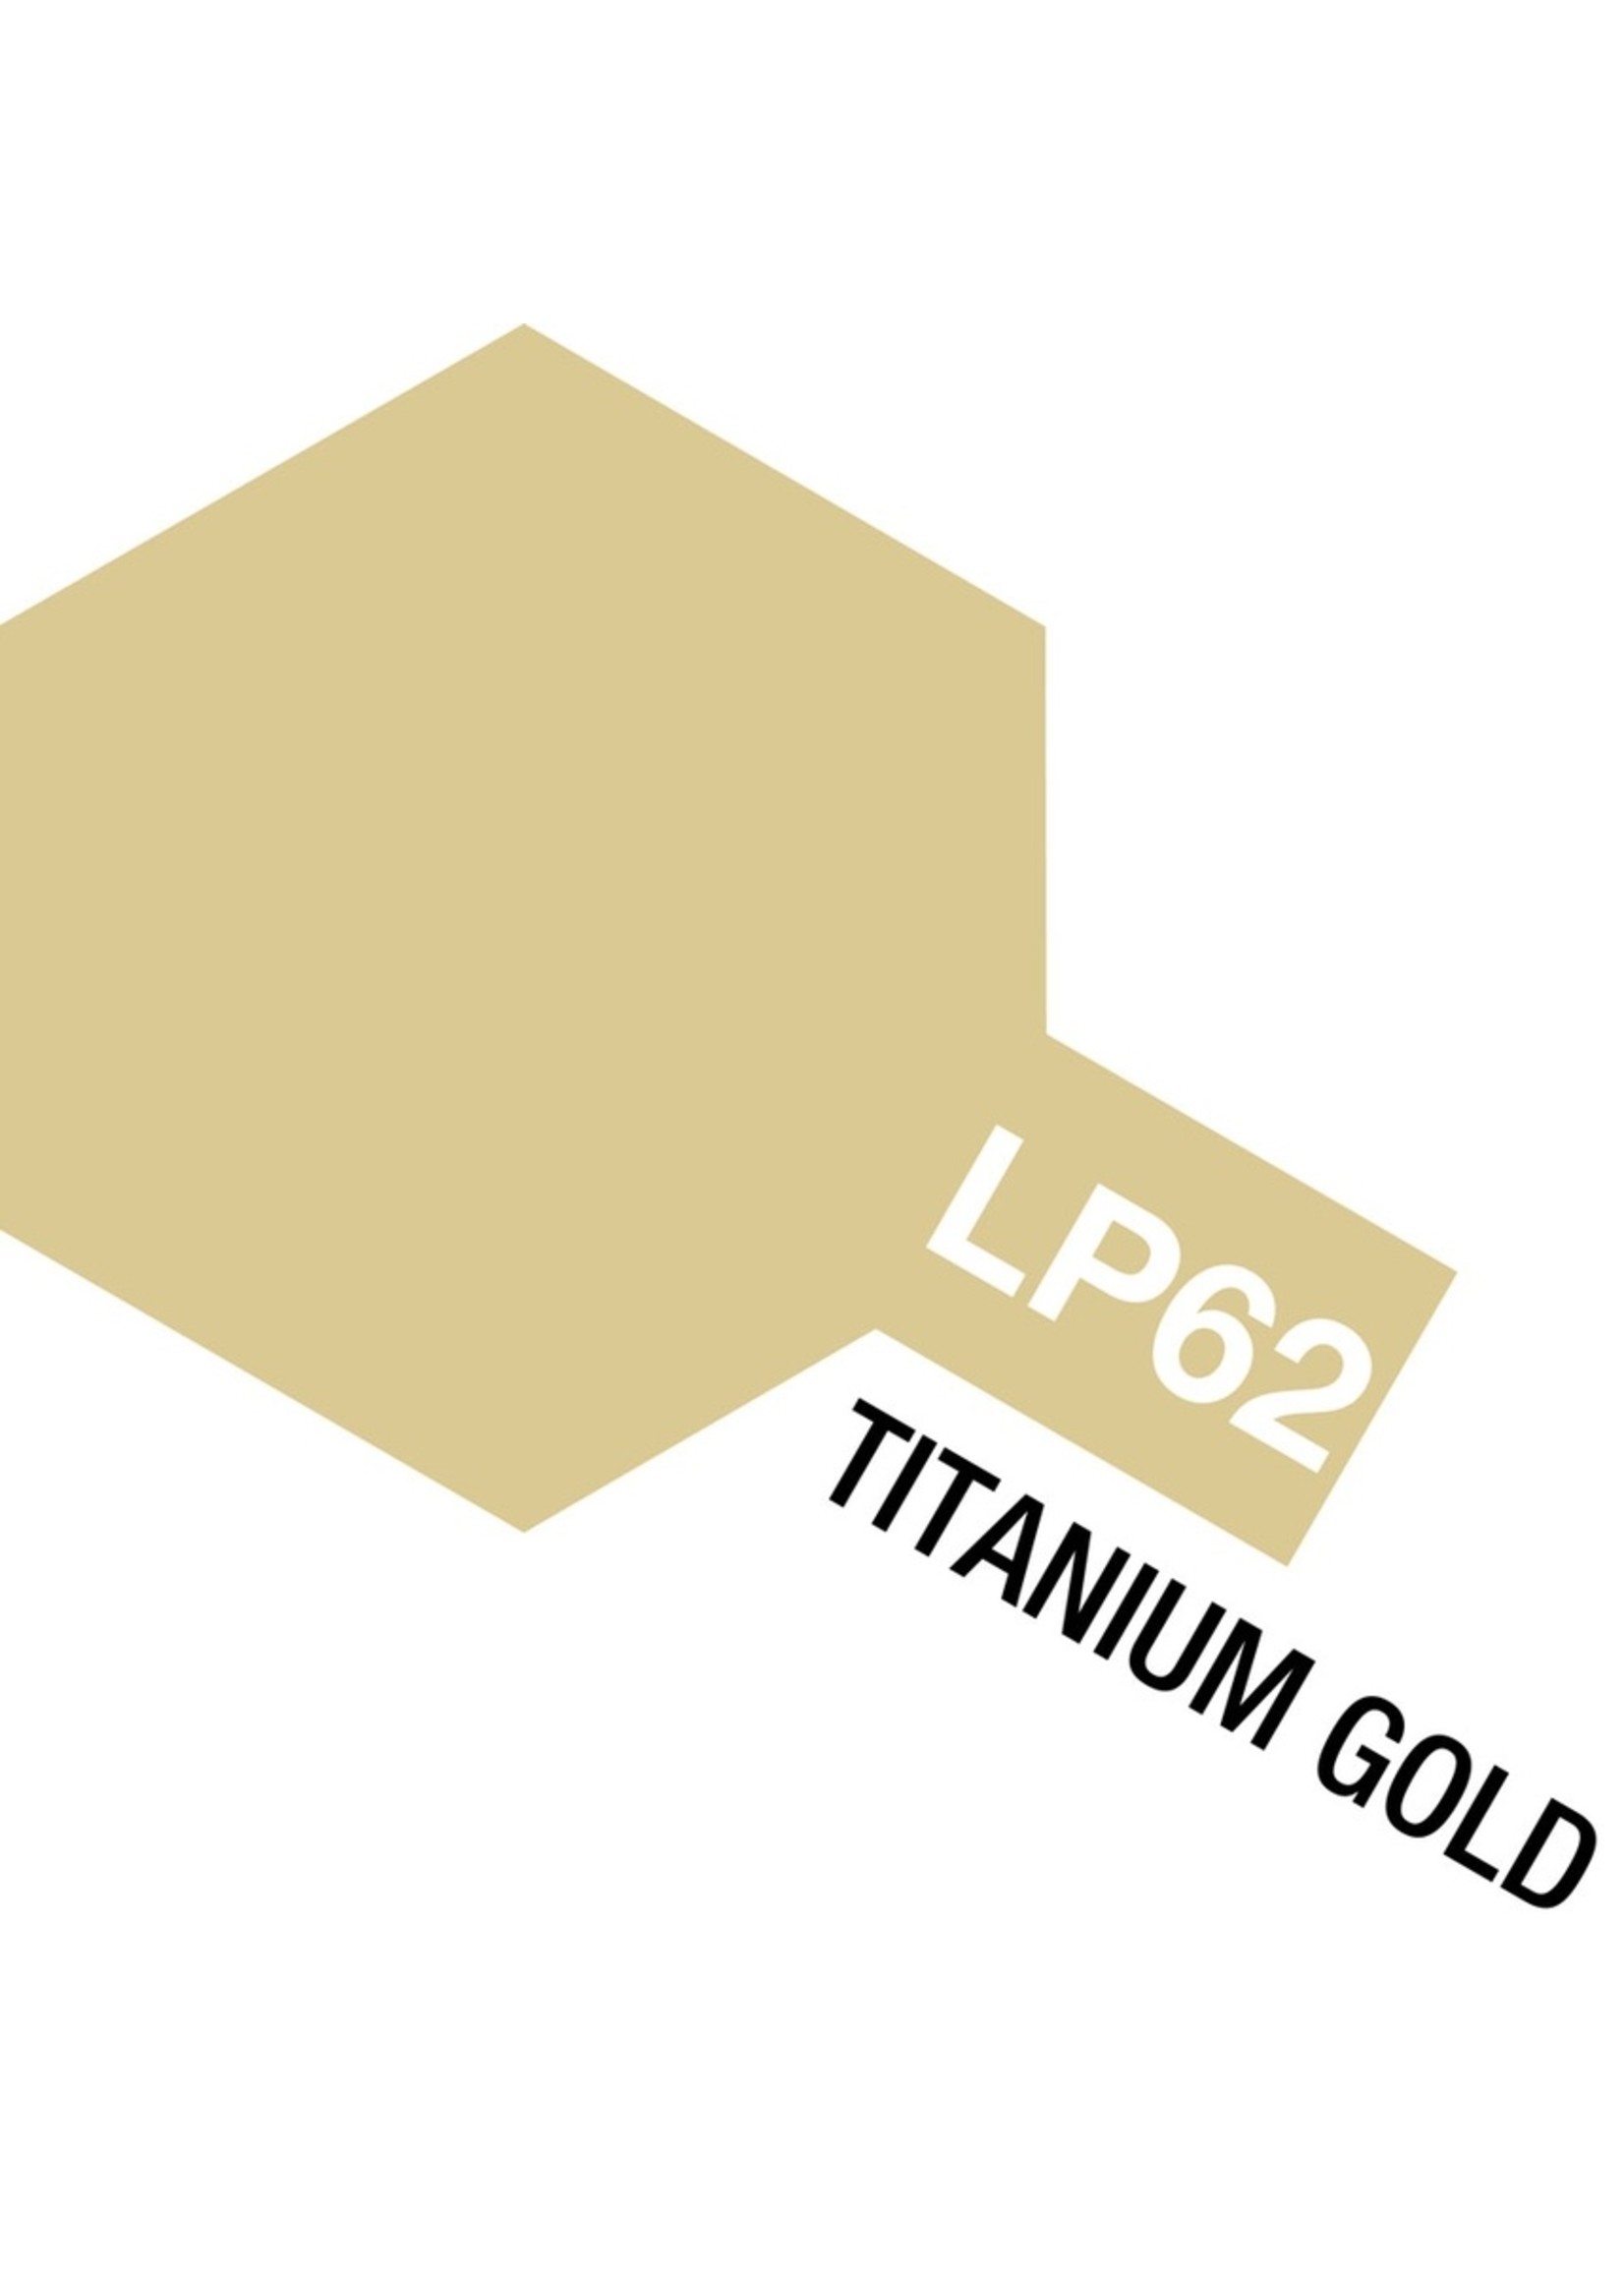 Tamiya 82162 - LP-62 Titanium Gold Lacquer Paint 10ml